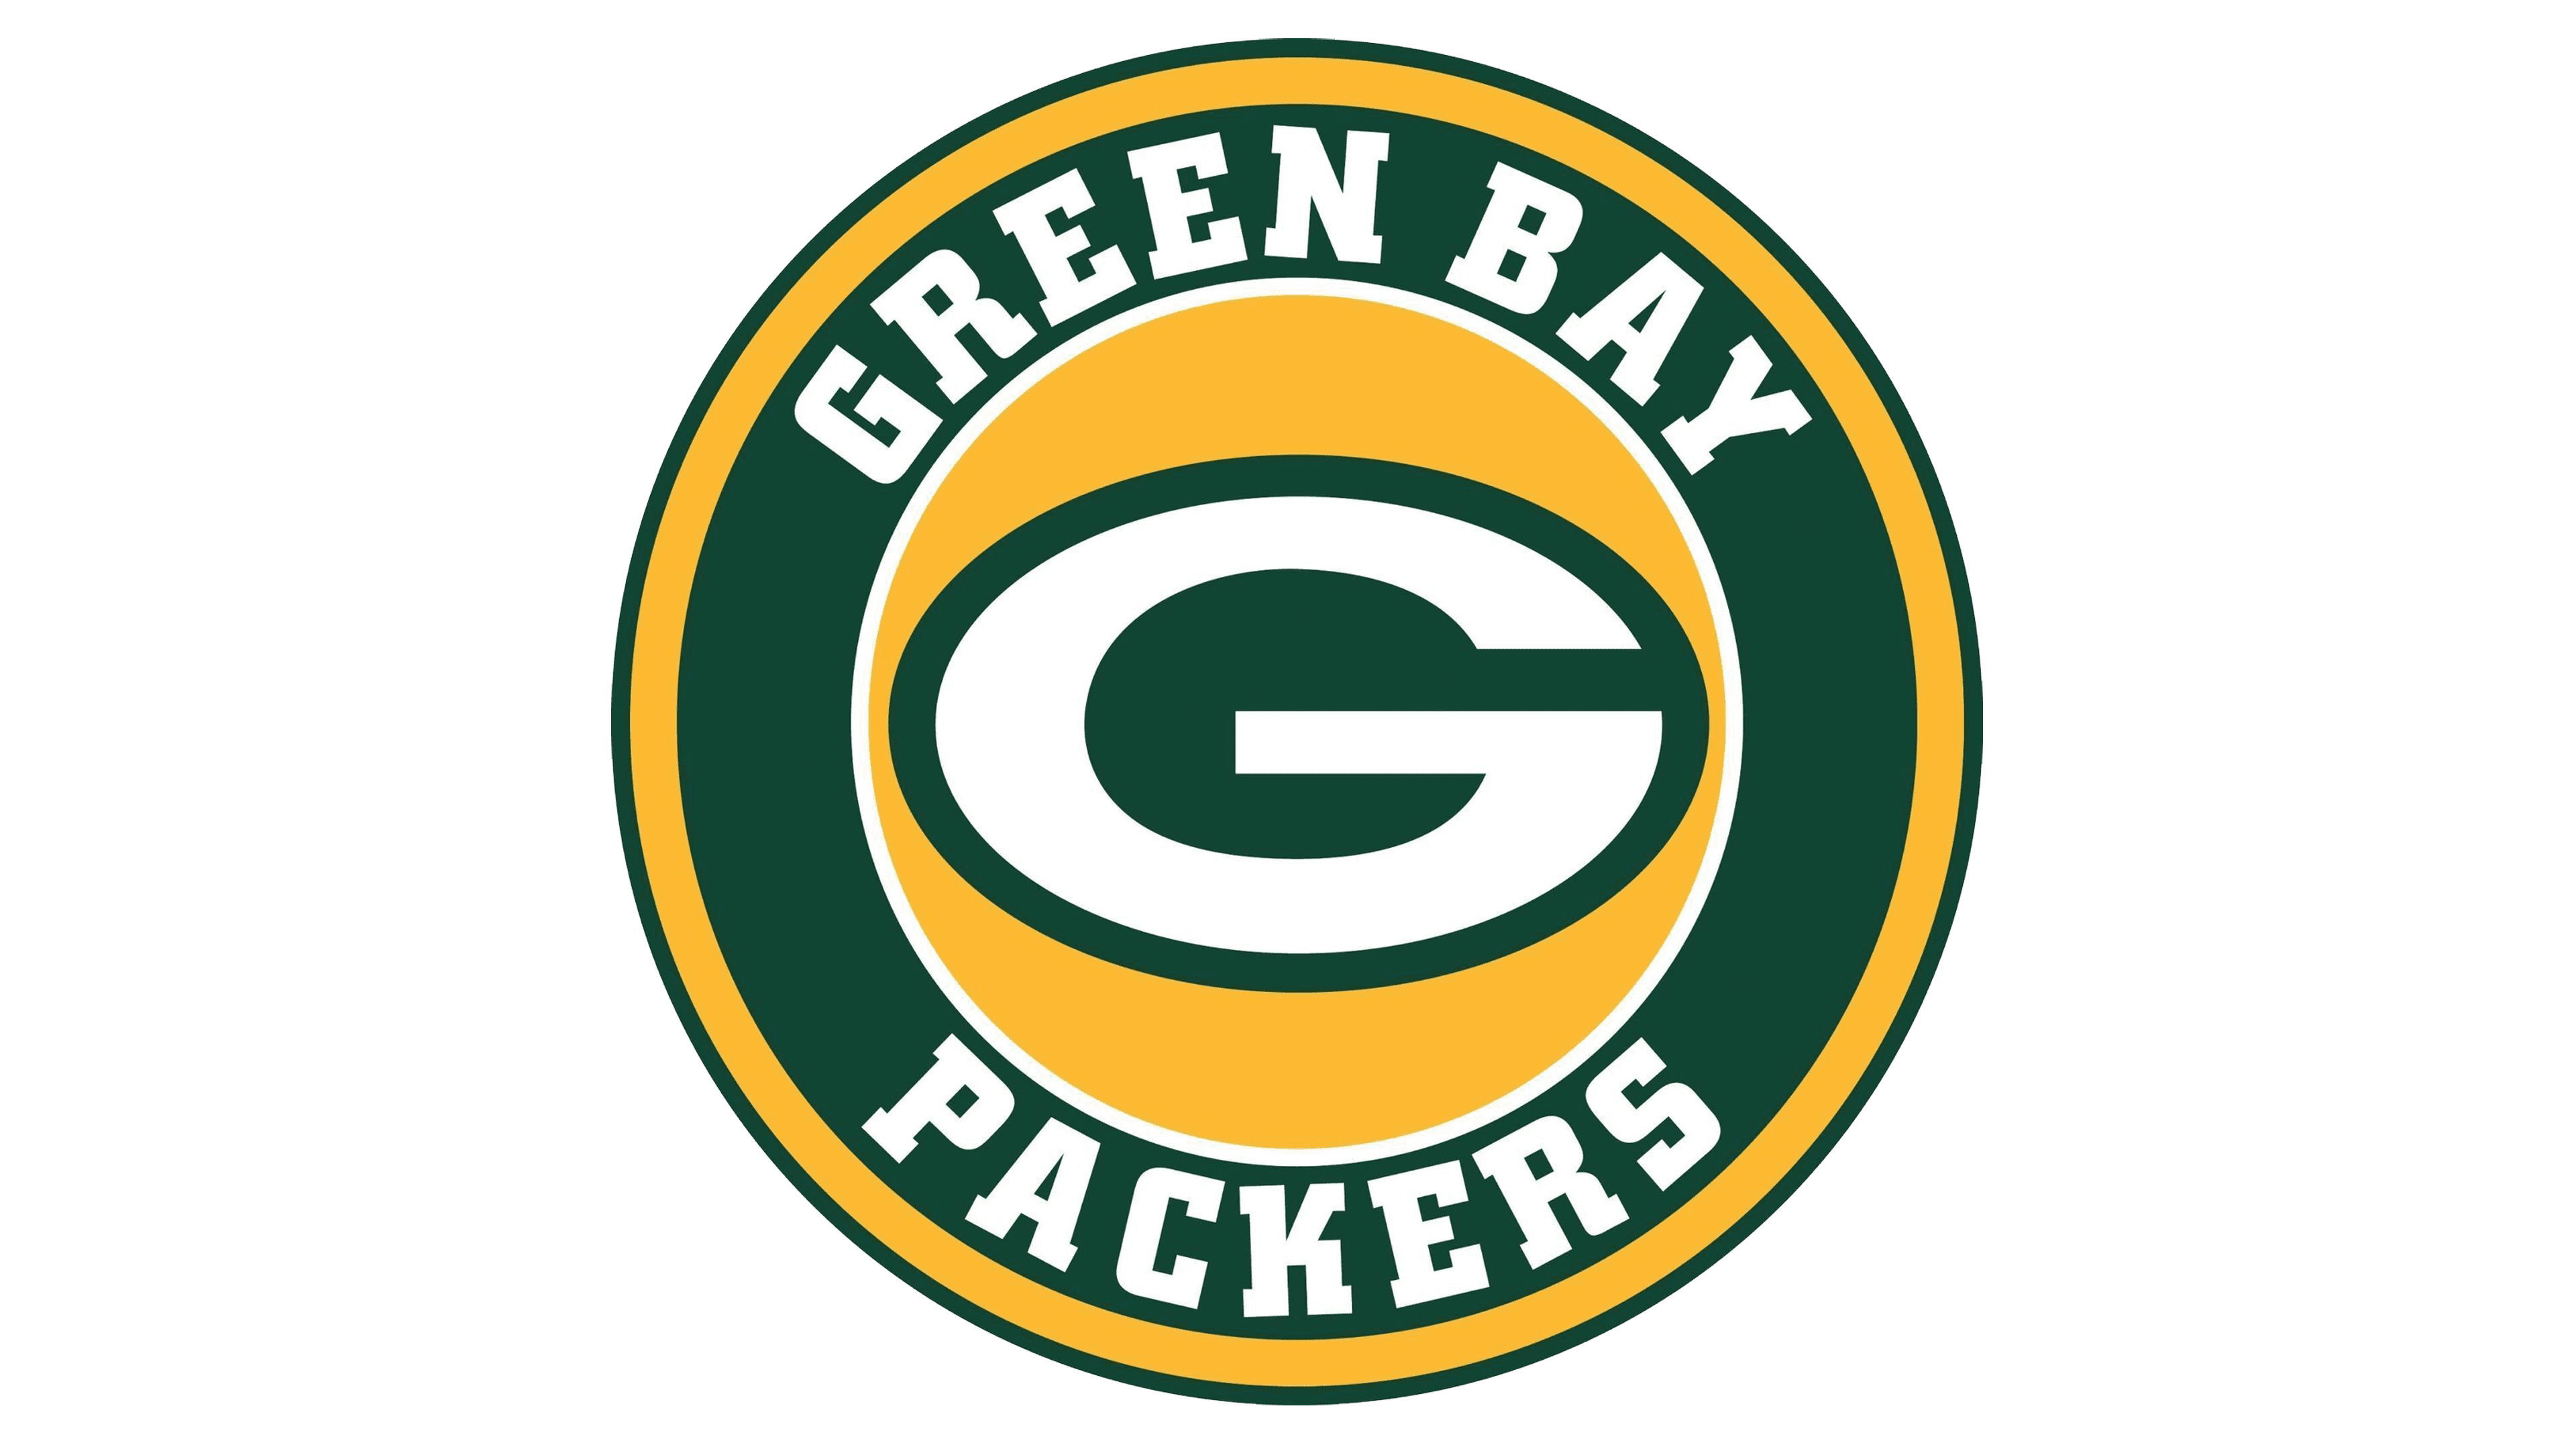 NFL Logo Green Bay Packers 45 70366 Green Camo Words